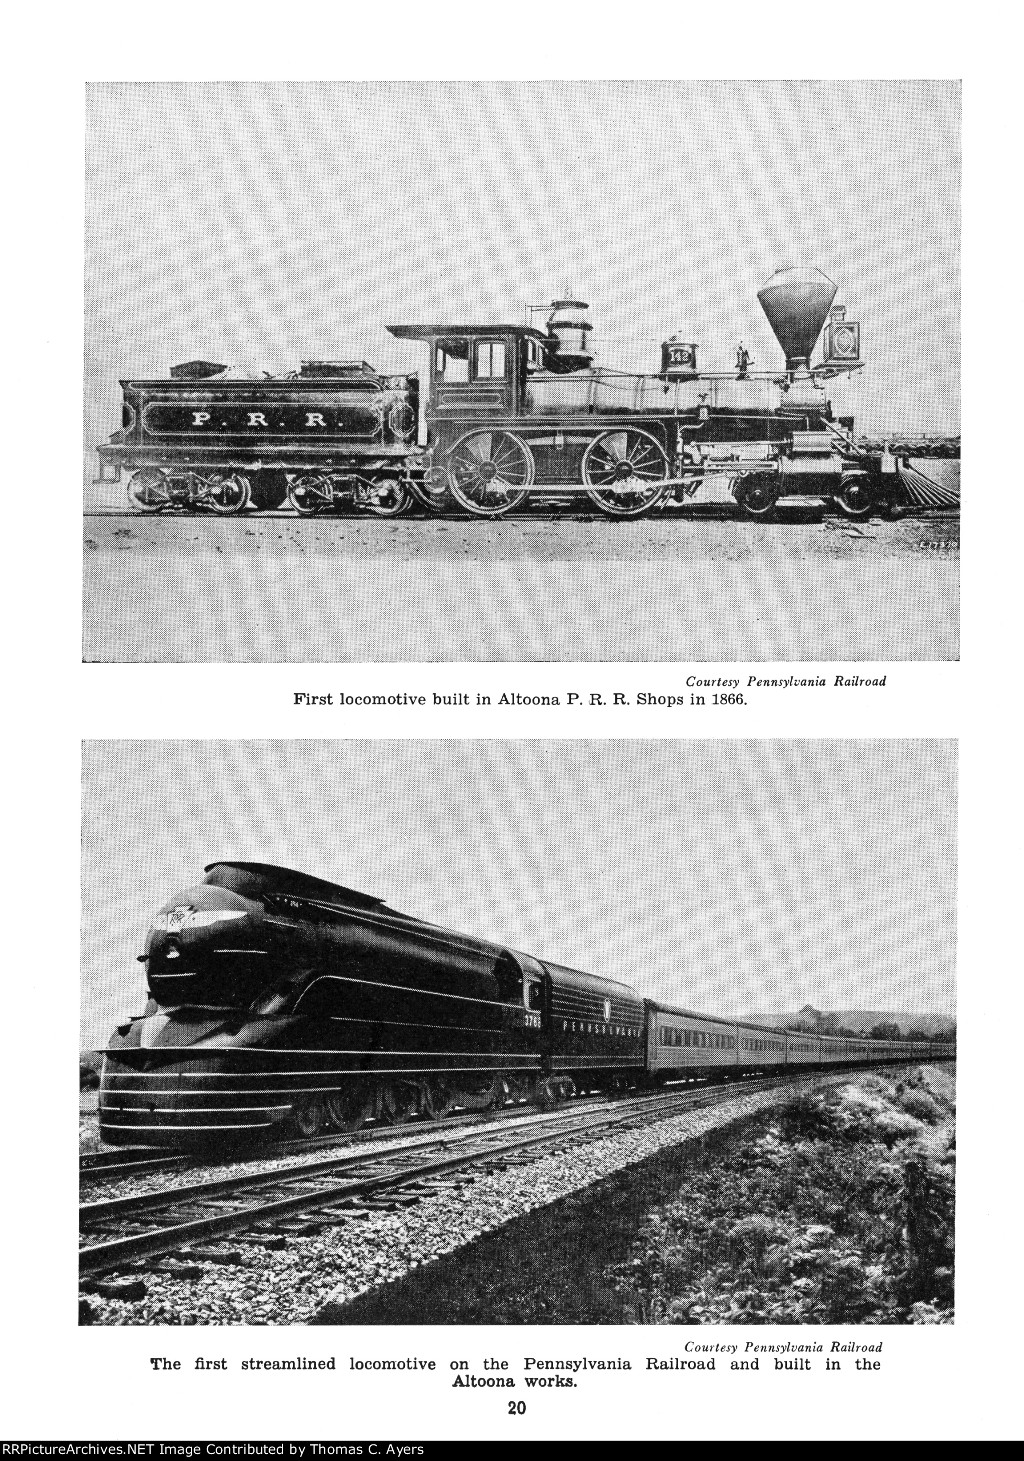 "The Pennsylvania Railroad In Altoona," Page 20, 1949